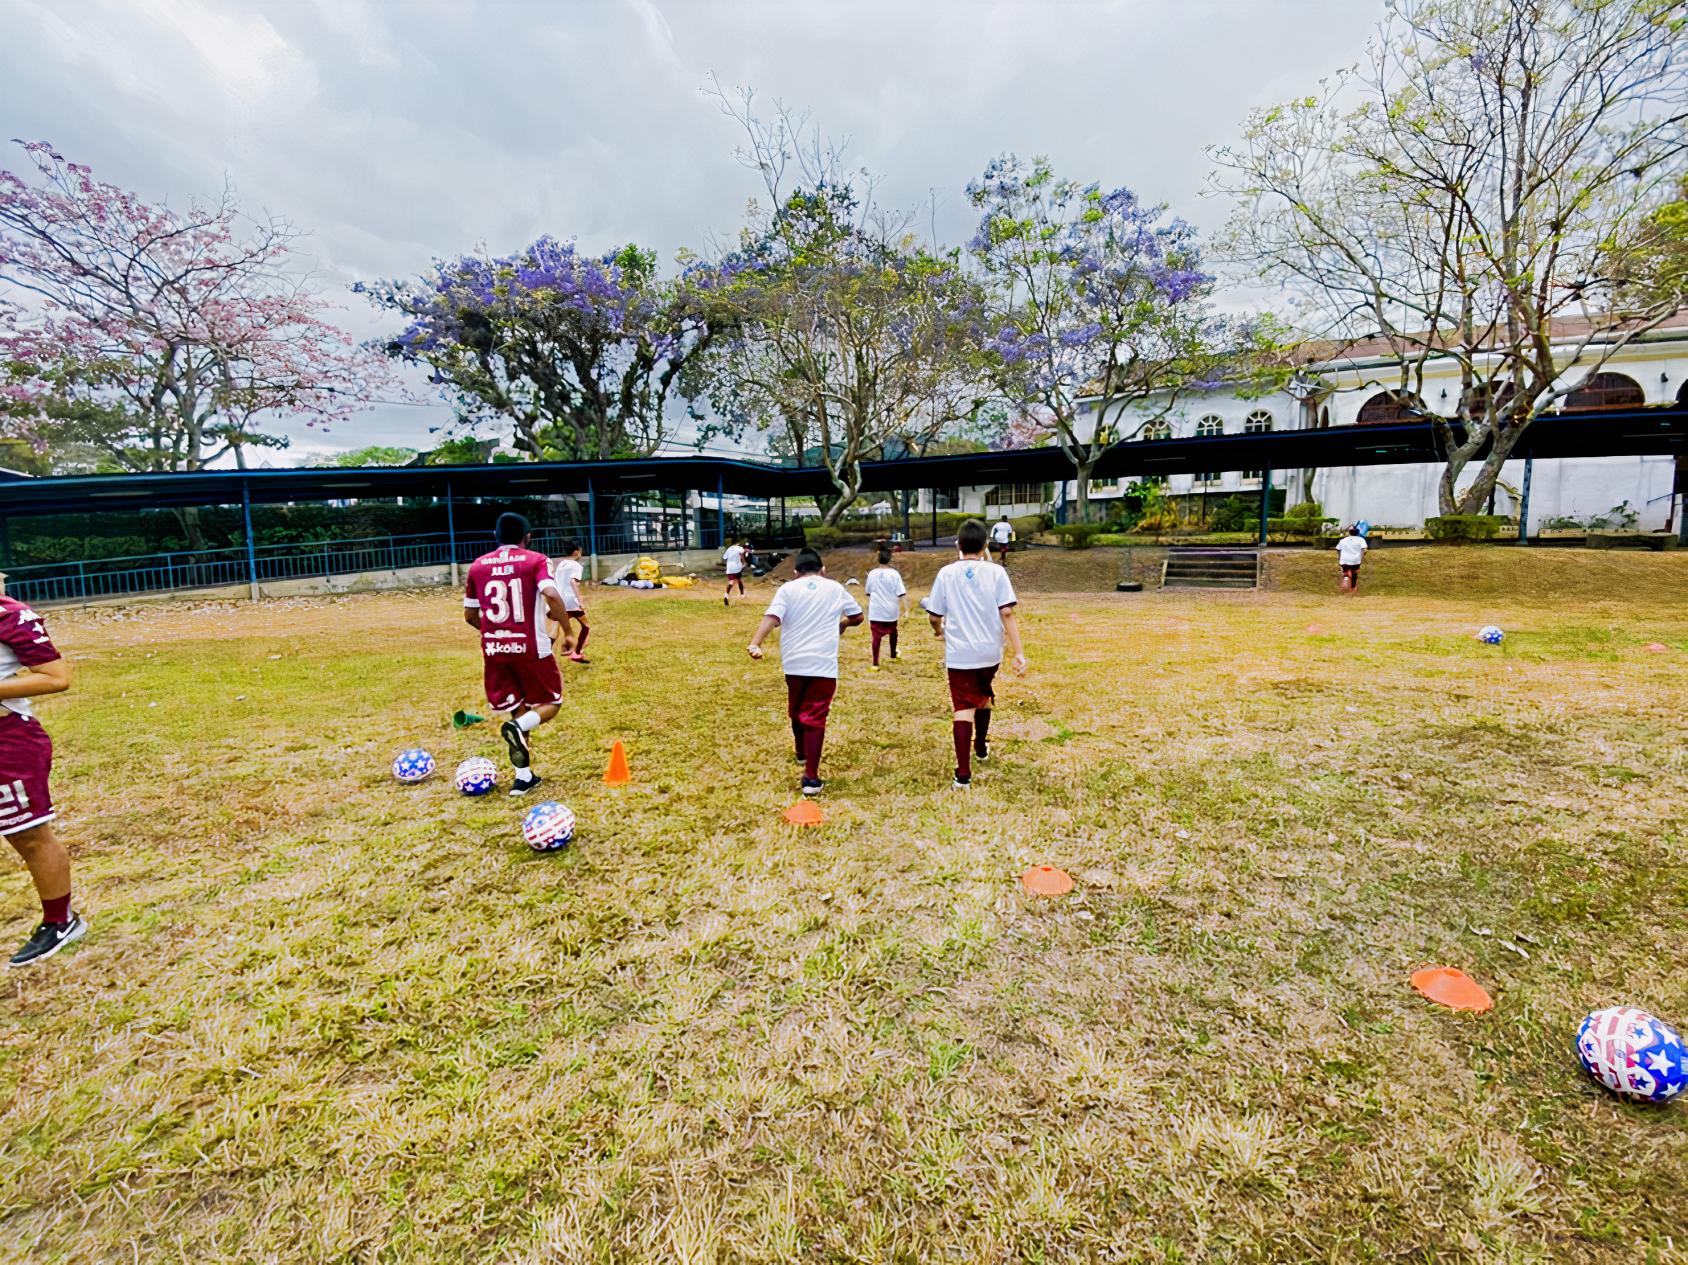 Children in white and purple uniforms practice soccer.